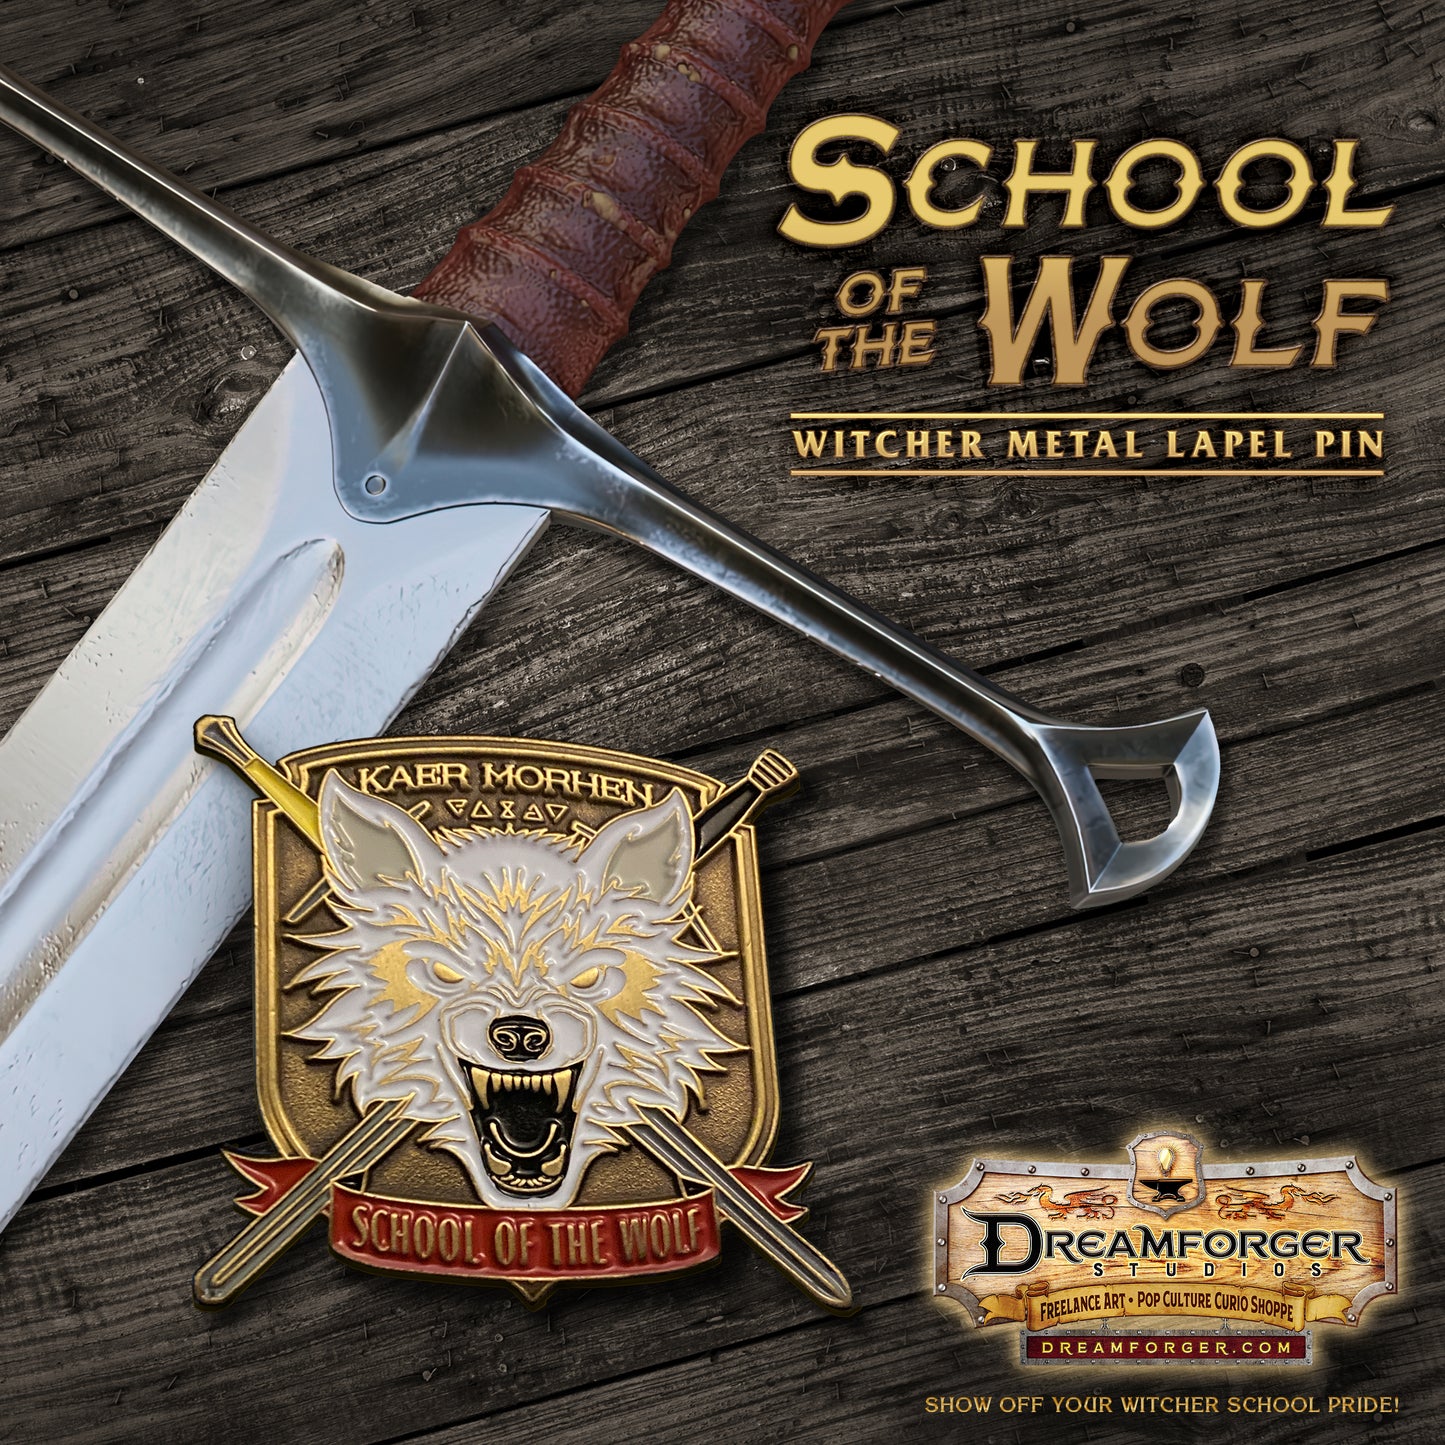 "Kaer Morhen - School of the Wolf" Metal Lapel Pin